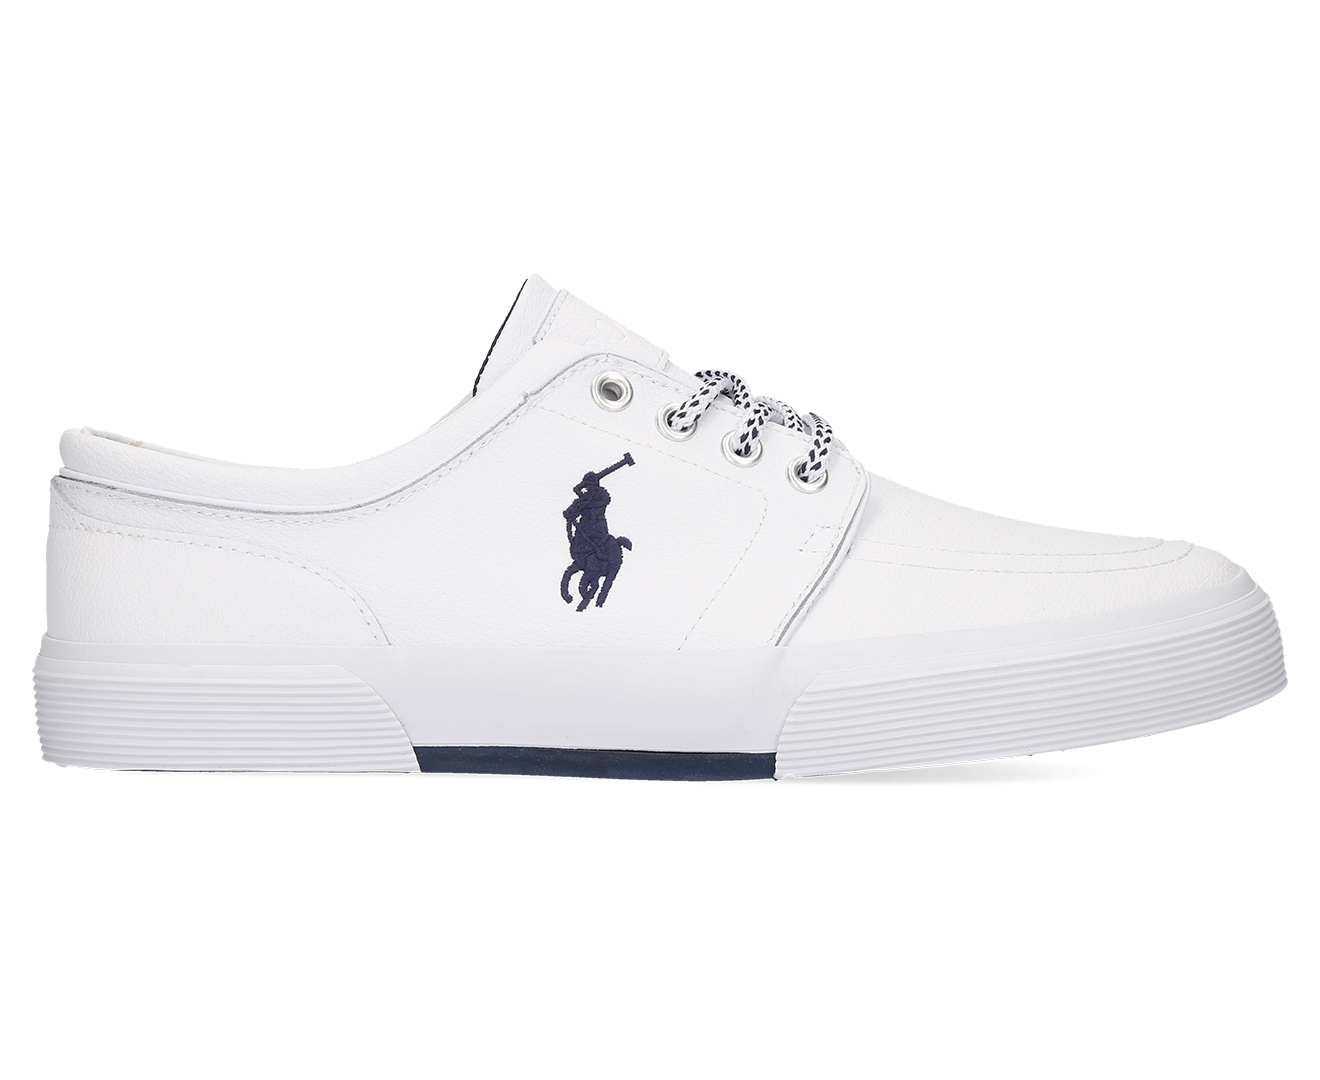 Polo Ralph Lauren Men's Faxon Low Sneakers - White Sports Leather ...